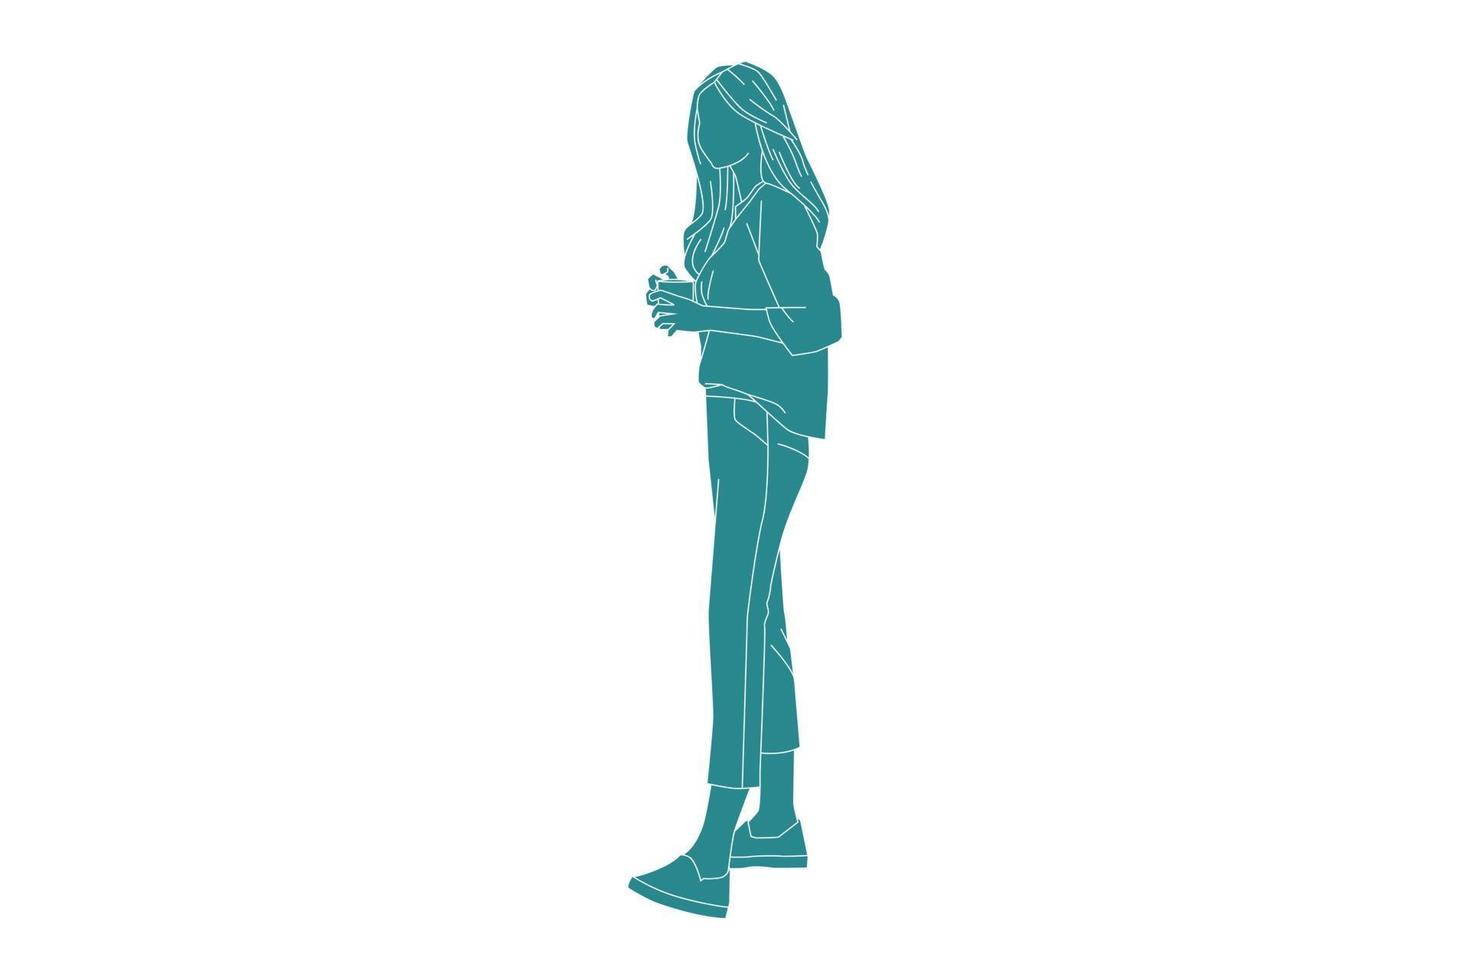 vektorillustration av moderiktig kvinna som poserar med sitt kaffe, platt stil med konturer vektor